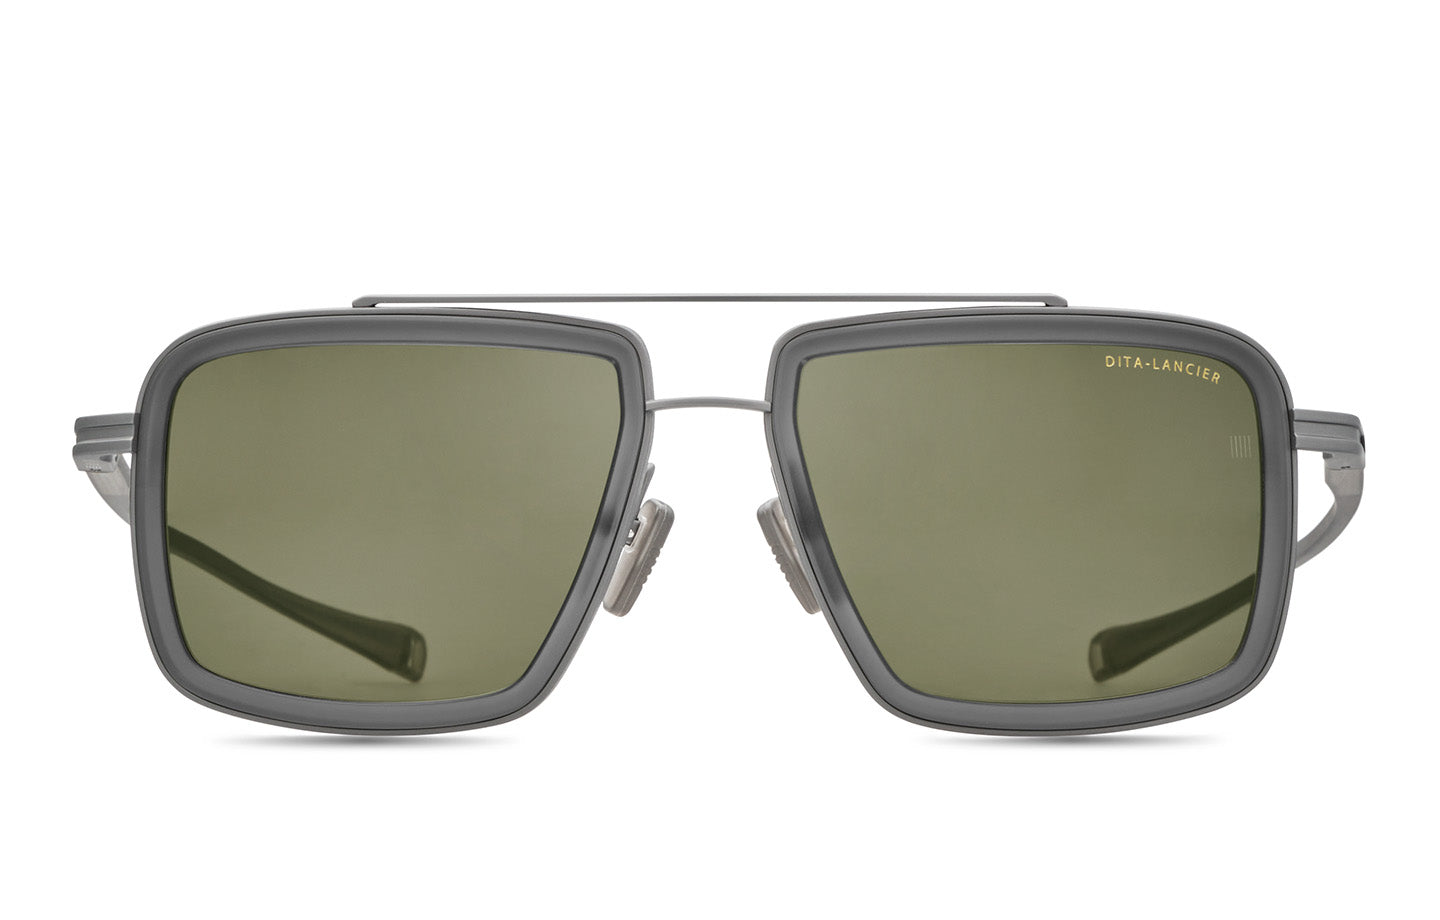 Dita DLS422-A-02 57mm New Sunglasses